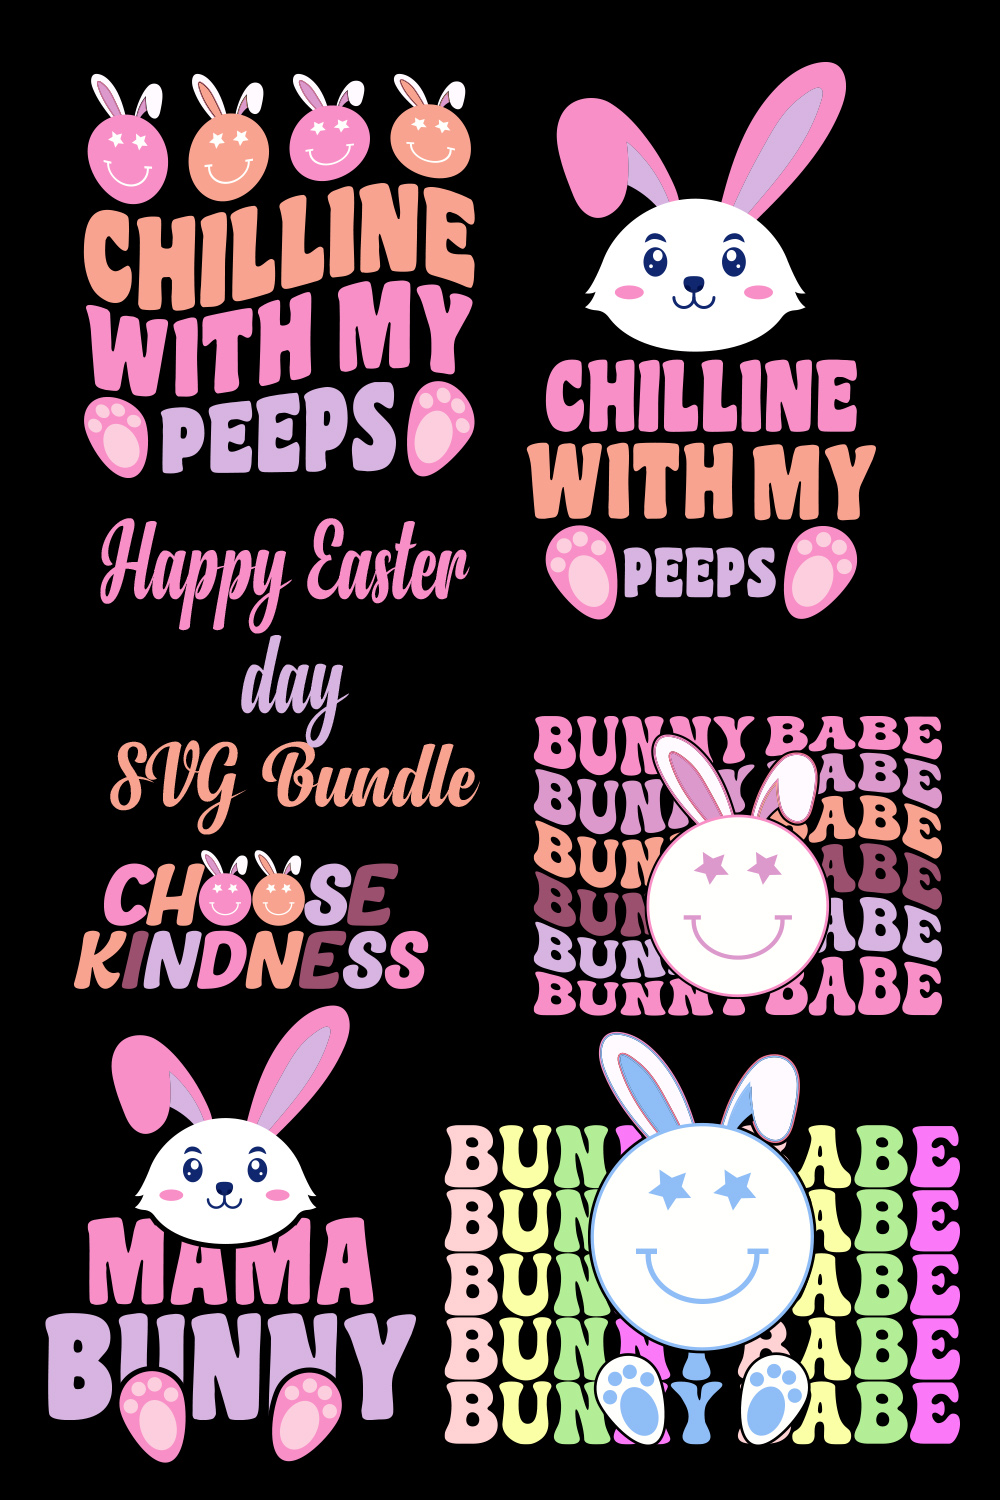 Happy Easter Day SVG Bundle design pinterest preview image.